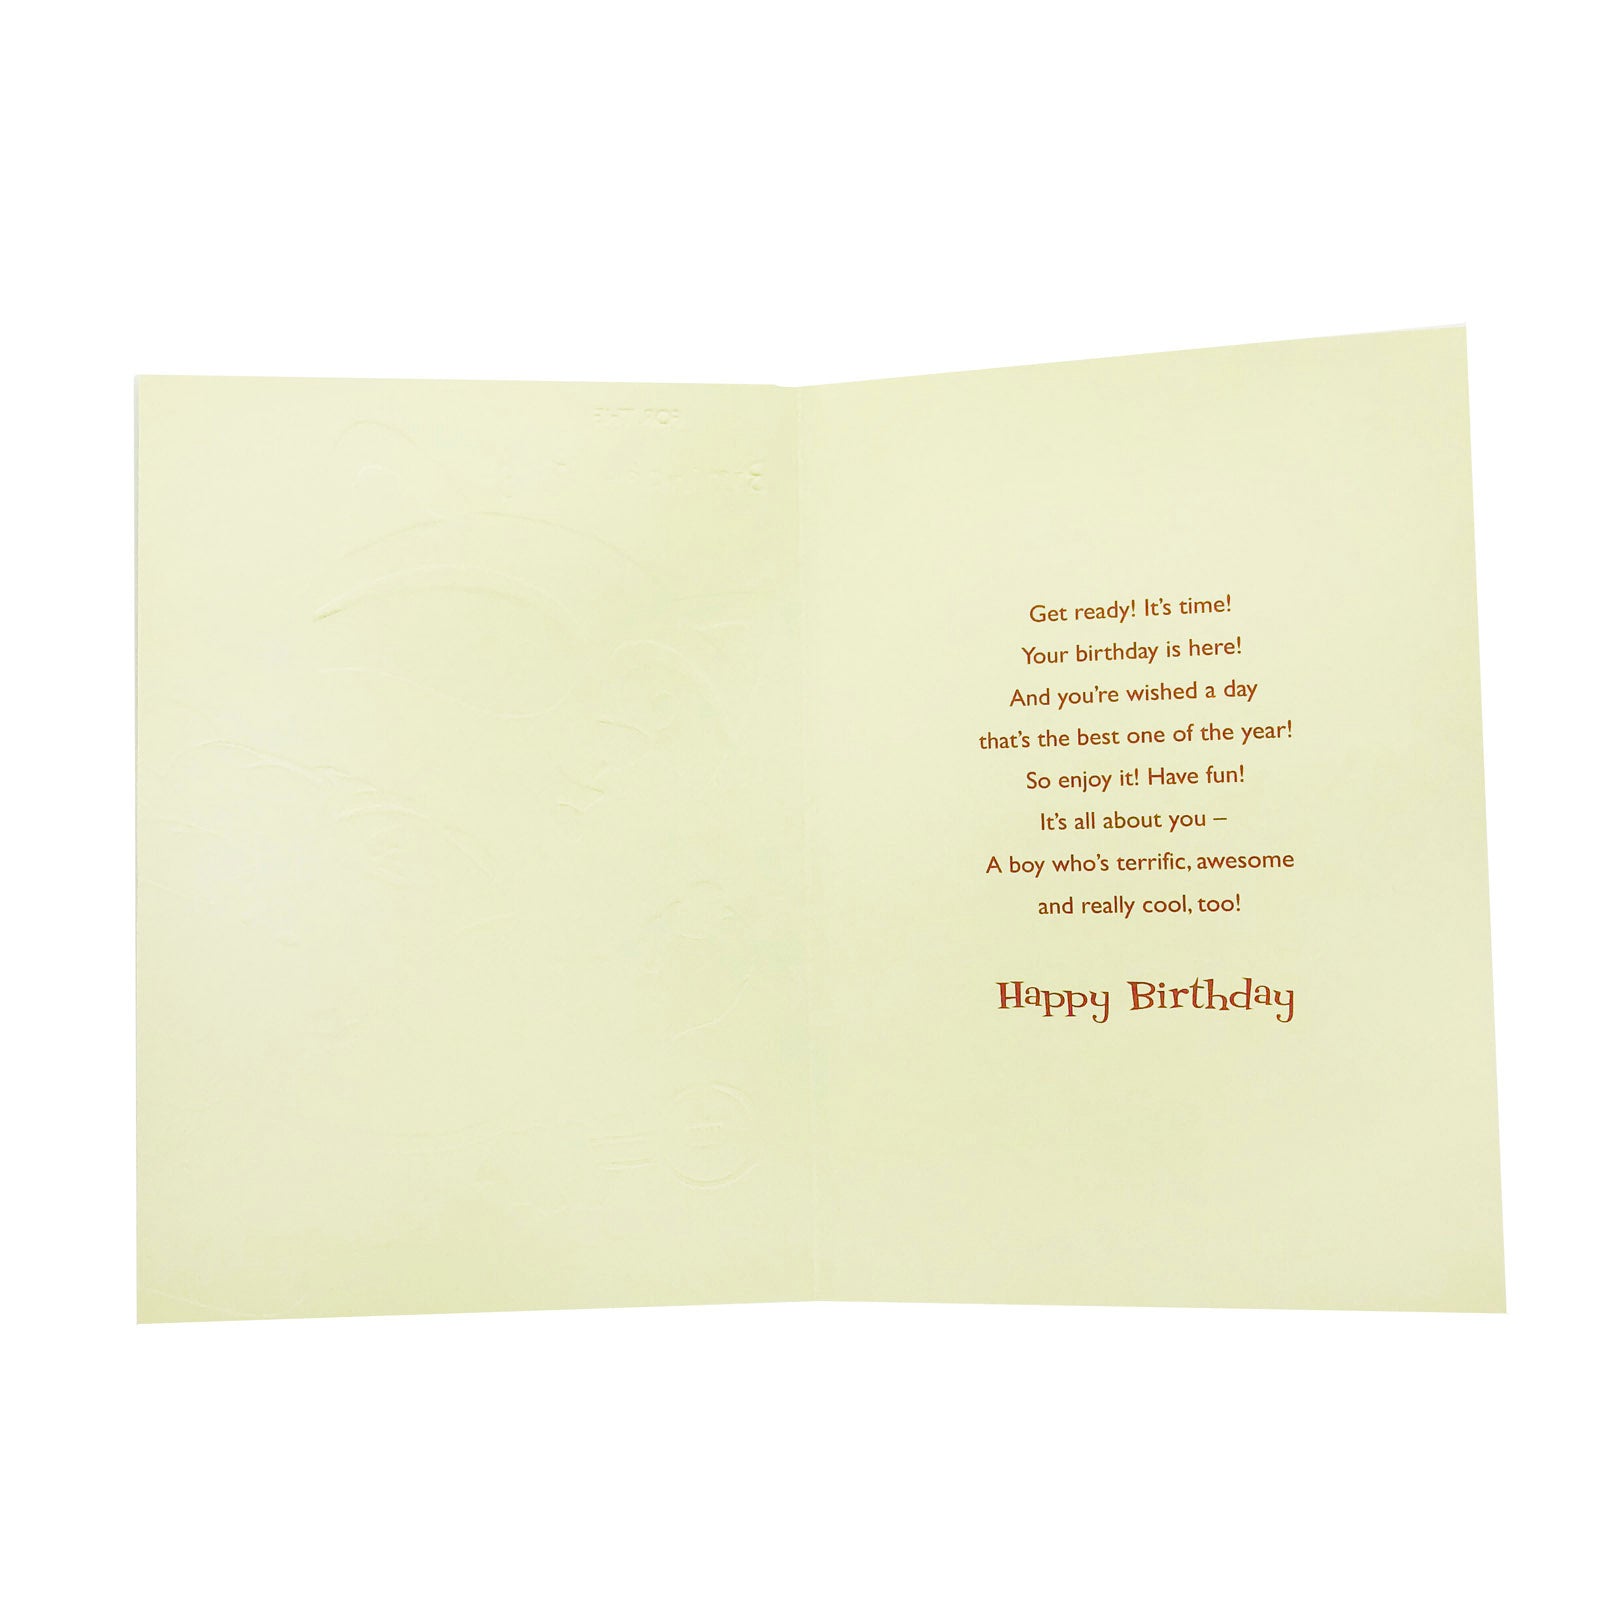 Designer Greetings Birthday Card - Birthday Boy - Raccoon